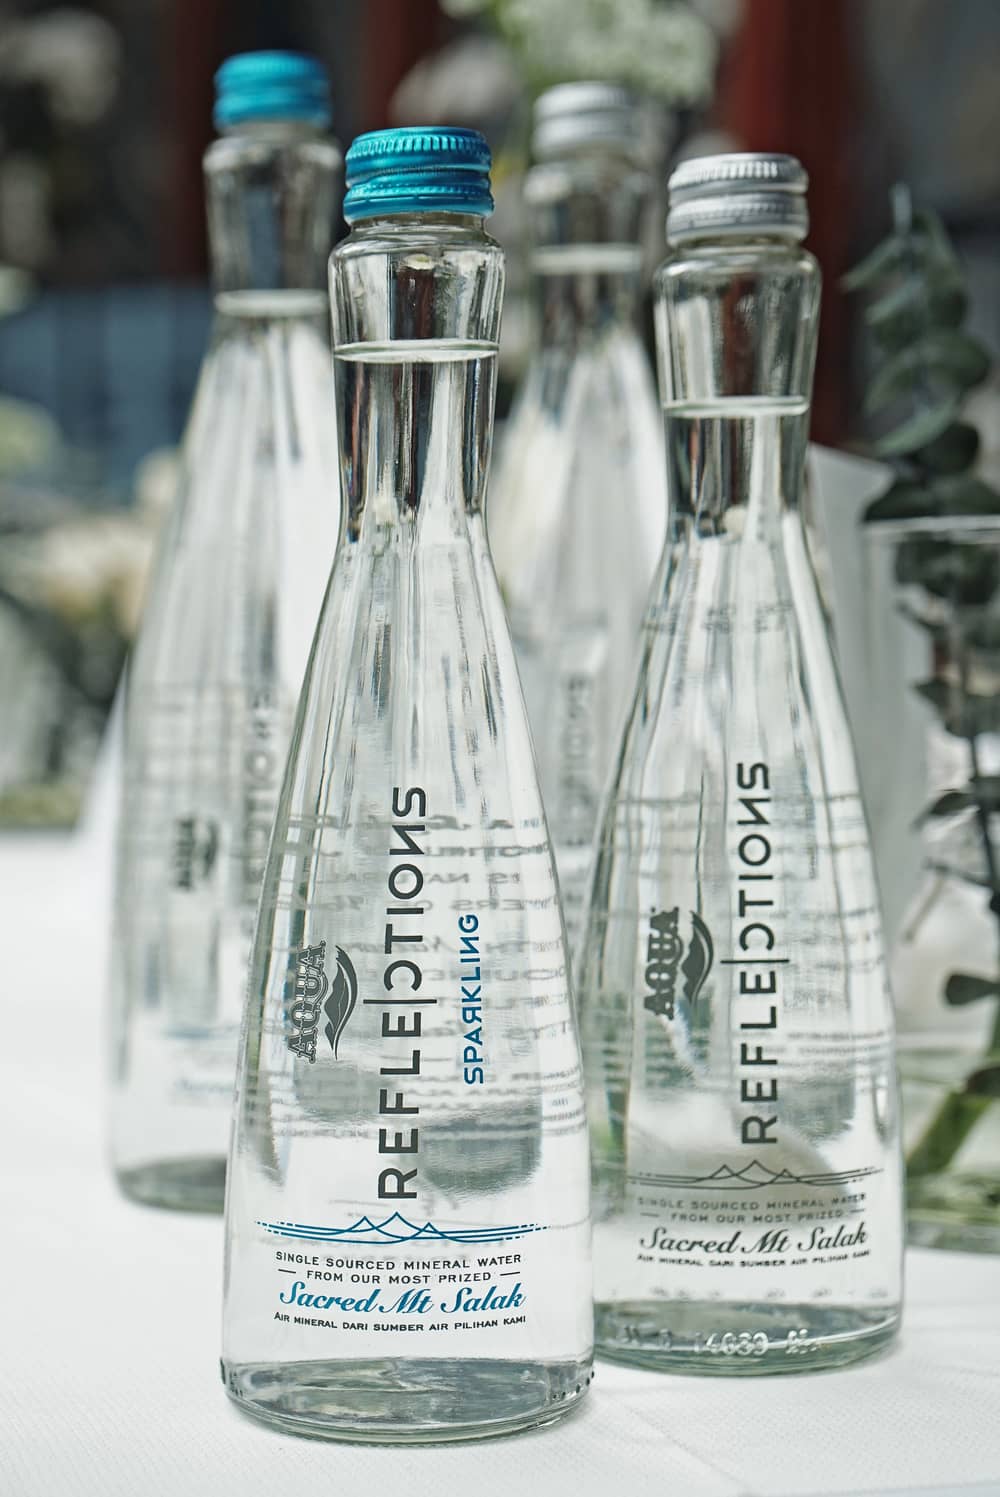 Aqua Reflections Luncurkan Desain Botol Baru